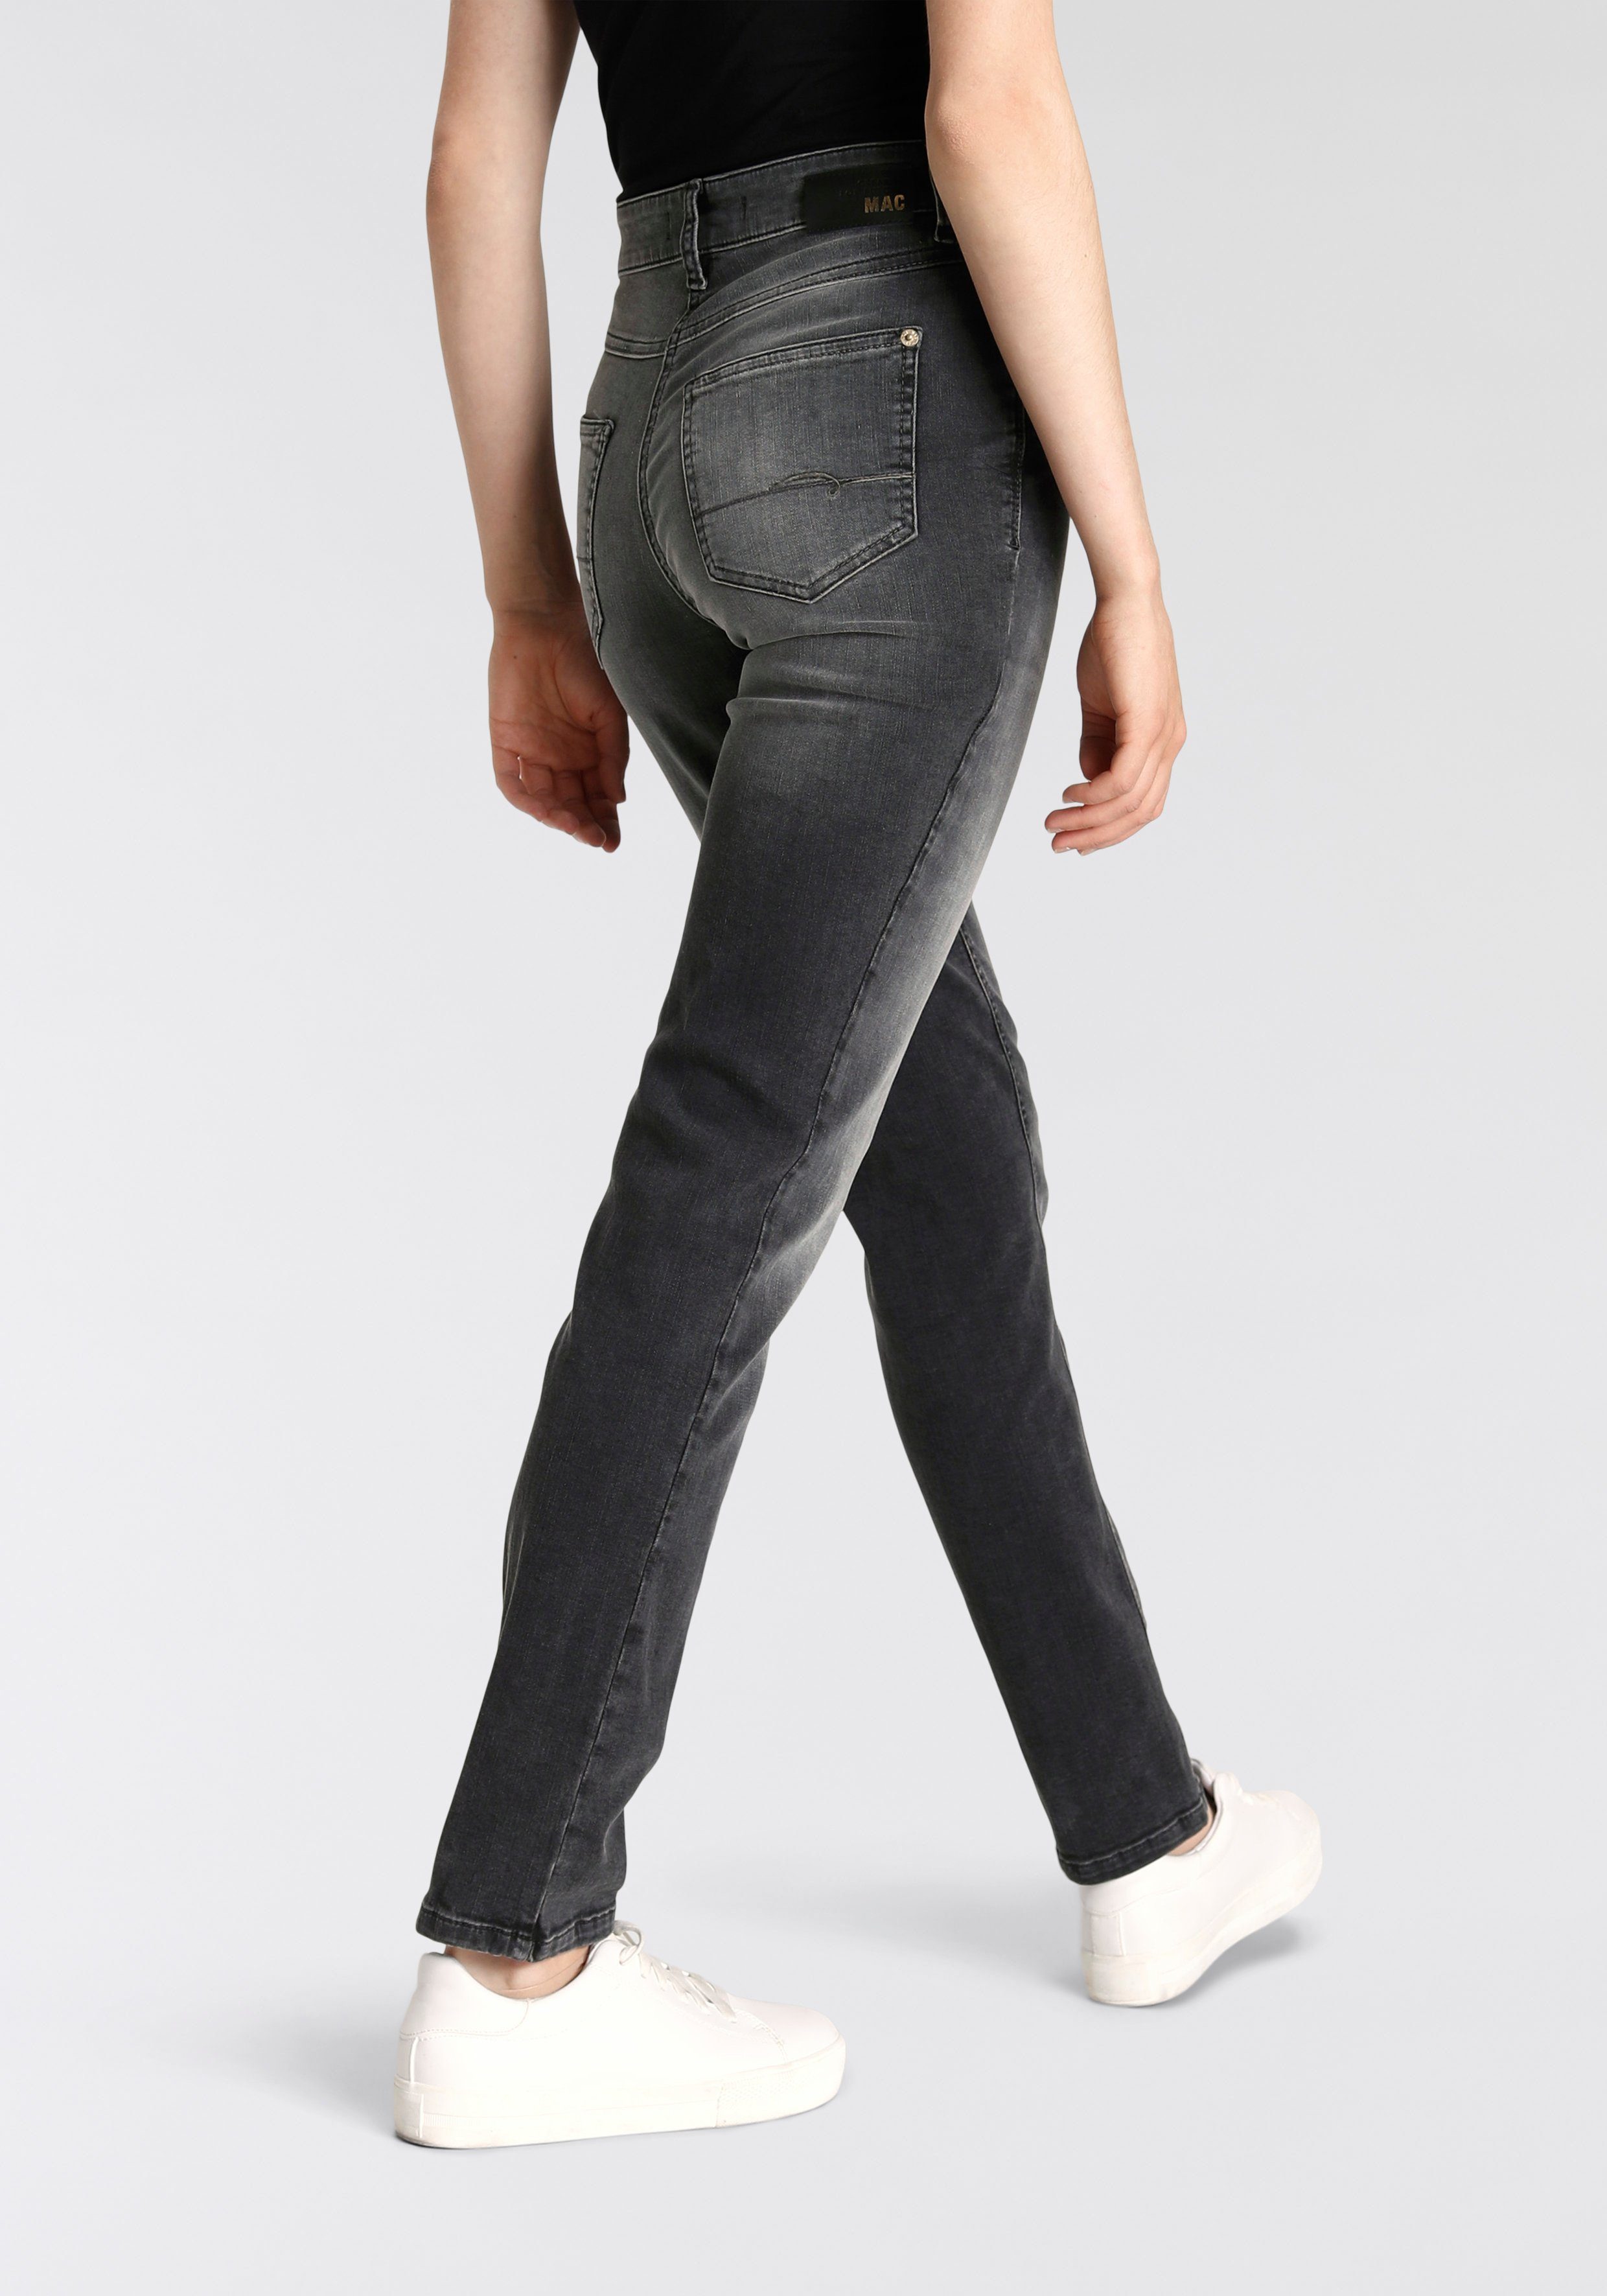 Persoonlijk krant omhelzing MAC Stretch jeans Melanie Recht model online bestellen | OTTO